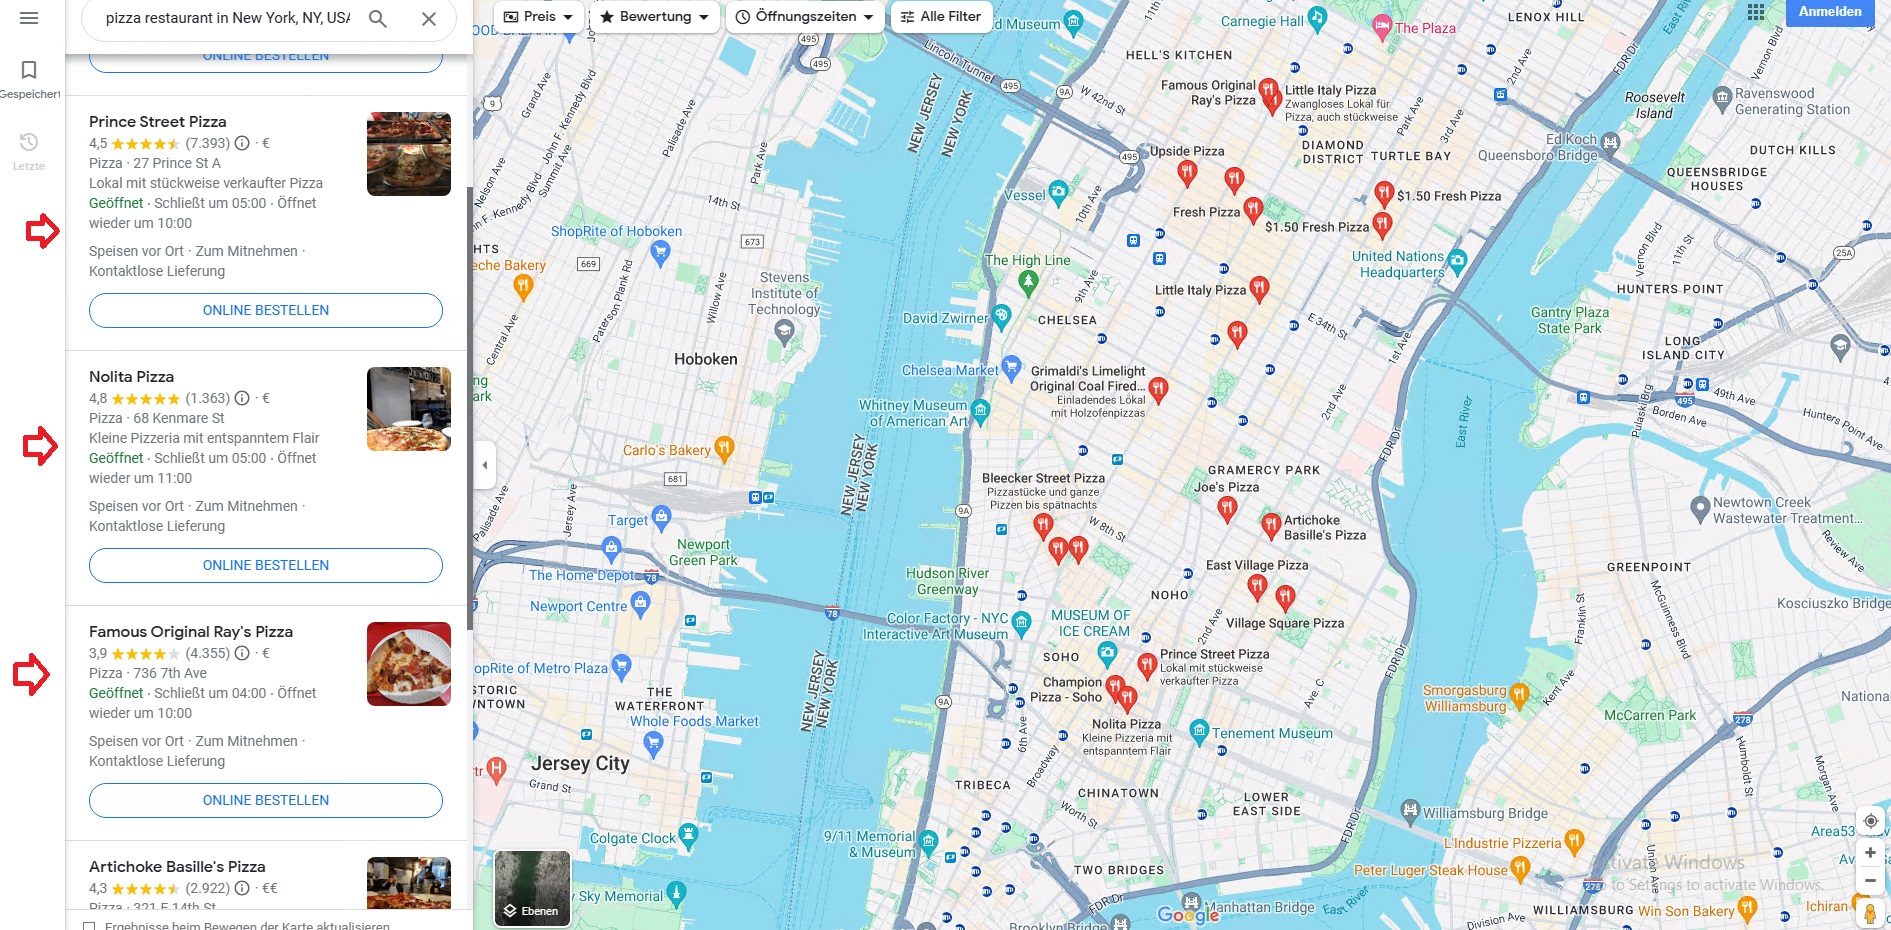 google maps data scraper - results